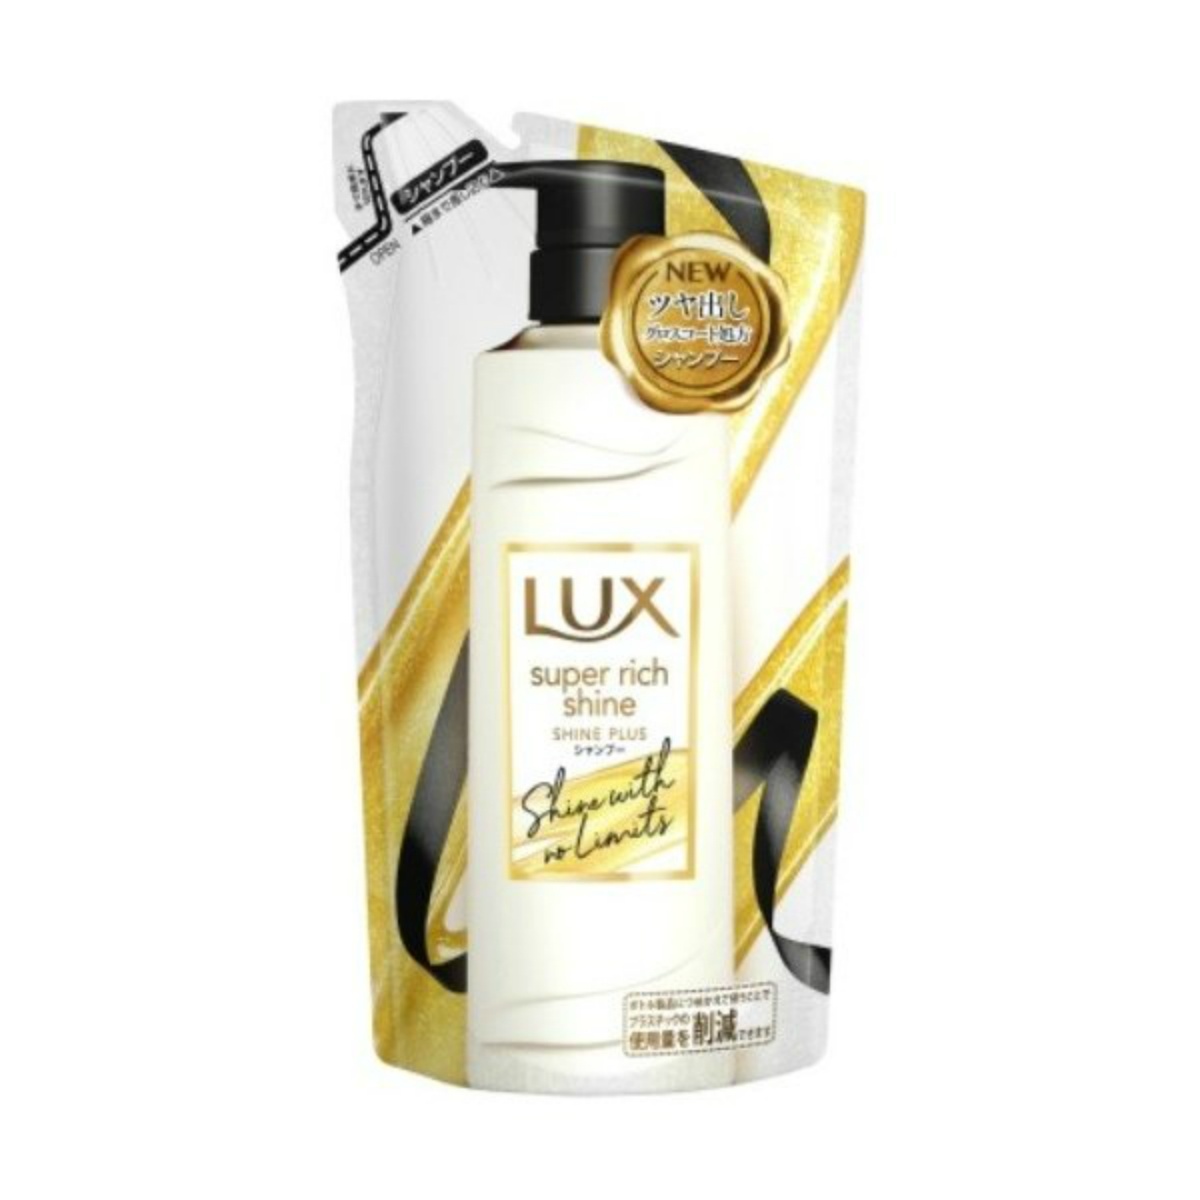 LUX LUX スーパーリッチシャイン シャインプラス シャンプー 詰め替え 300g×1個 ラックス スーパーリッチシャイン レディースヘアシャンプーの商品画像